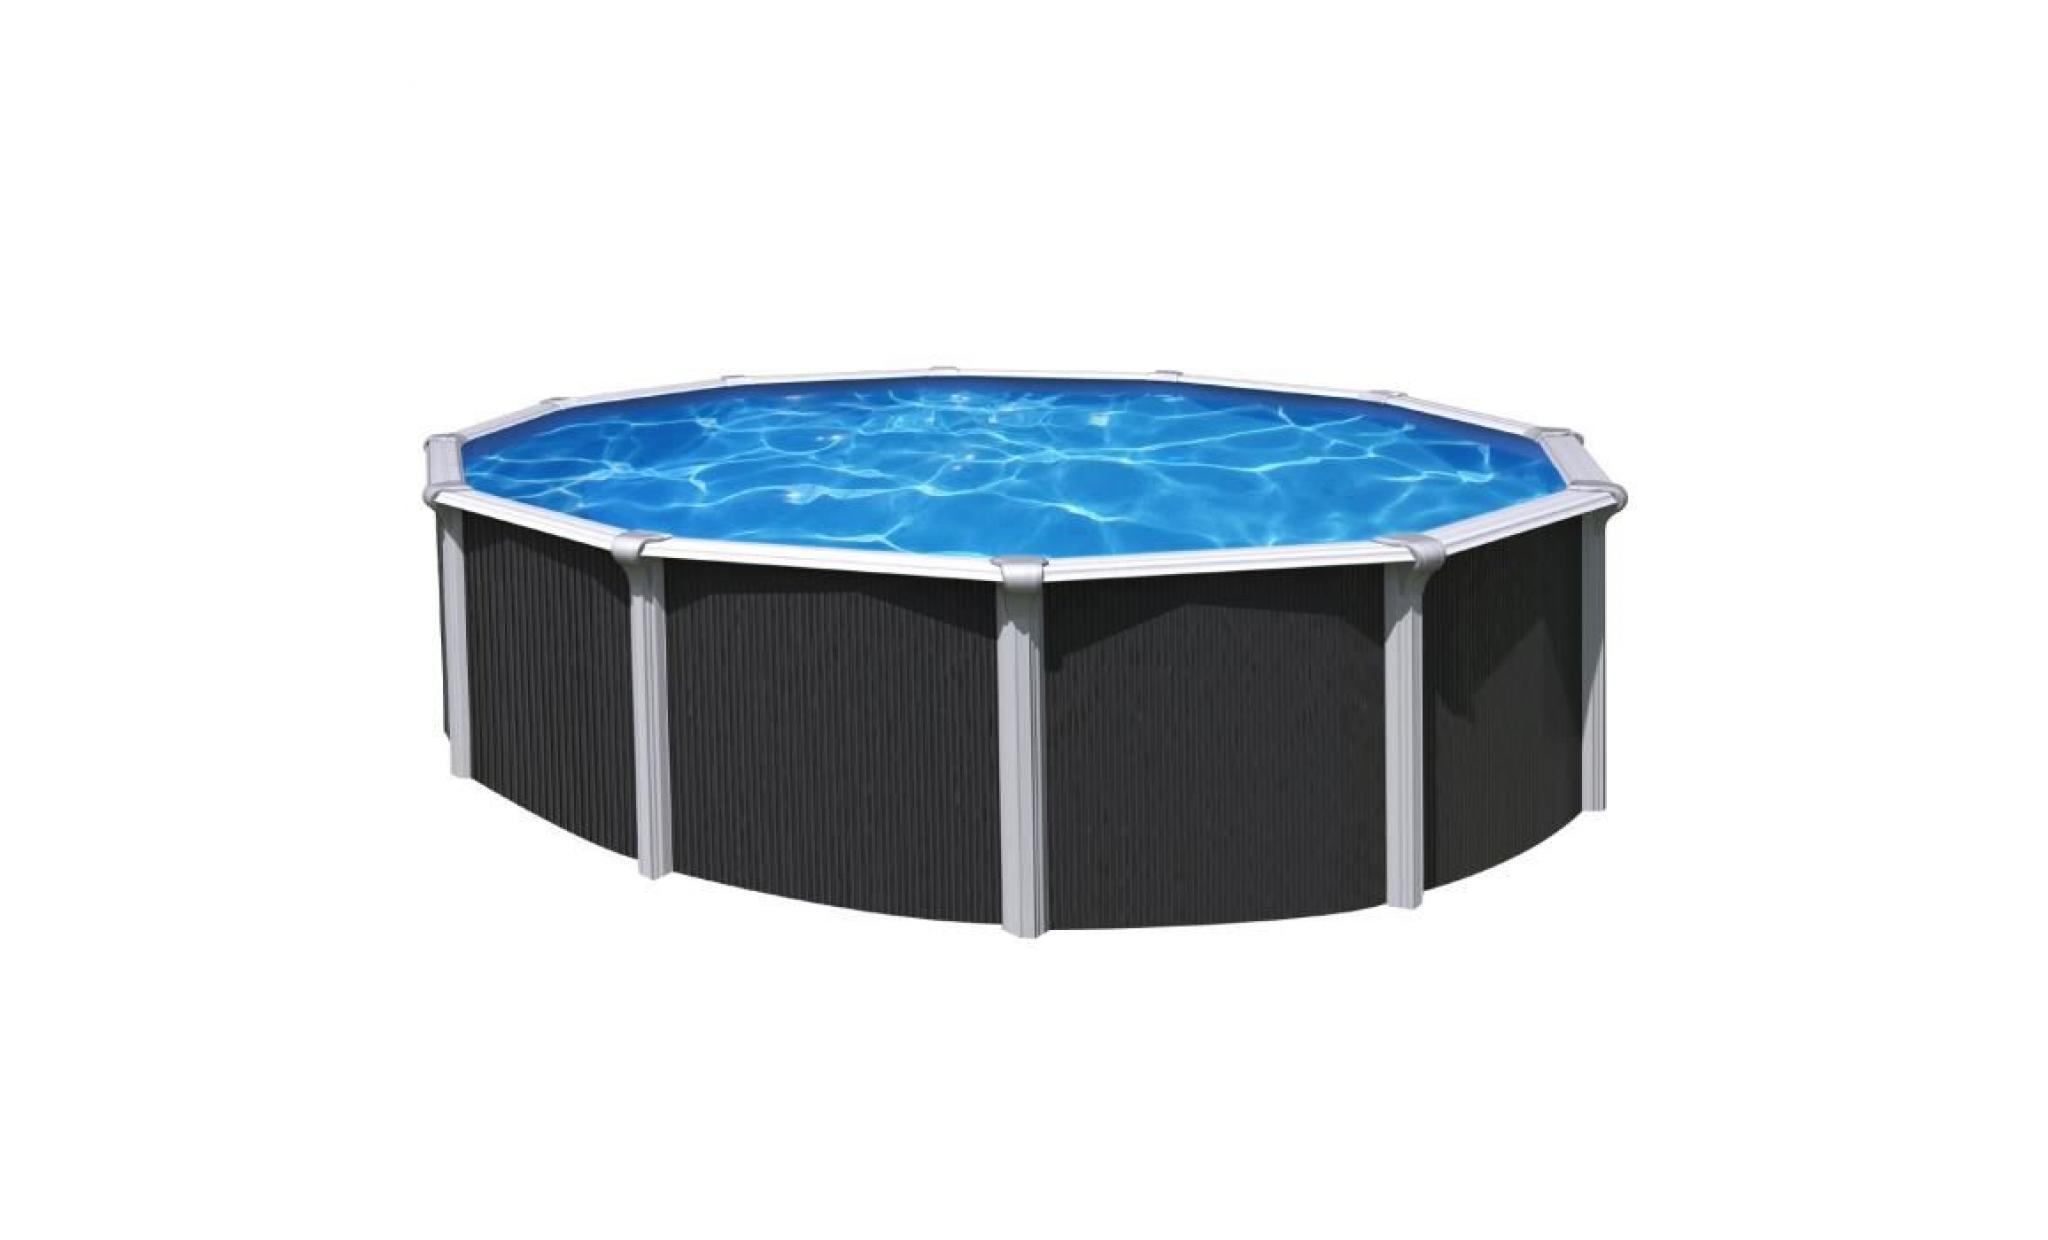 trigano piscine métal hors sol osmose   7,95 x 4,90 x 1,32 m   aspect bois pas cher